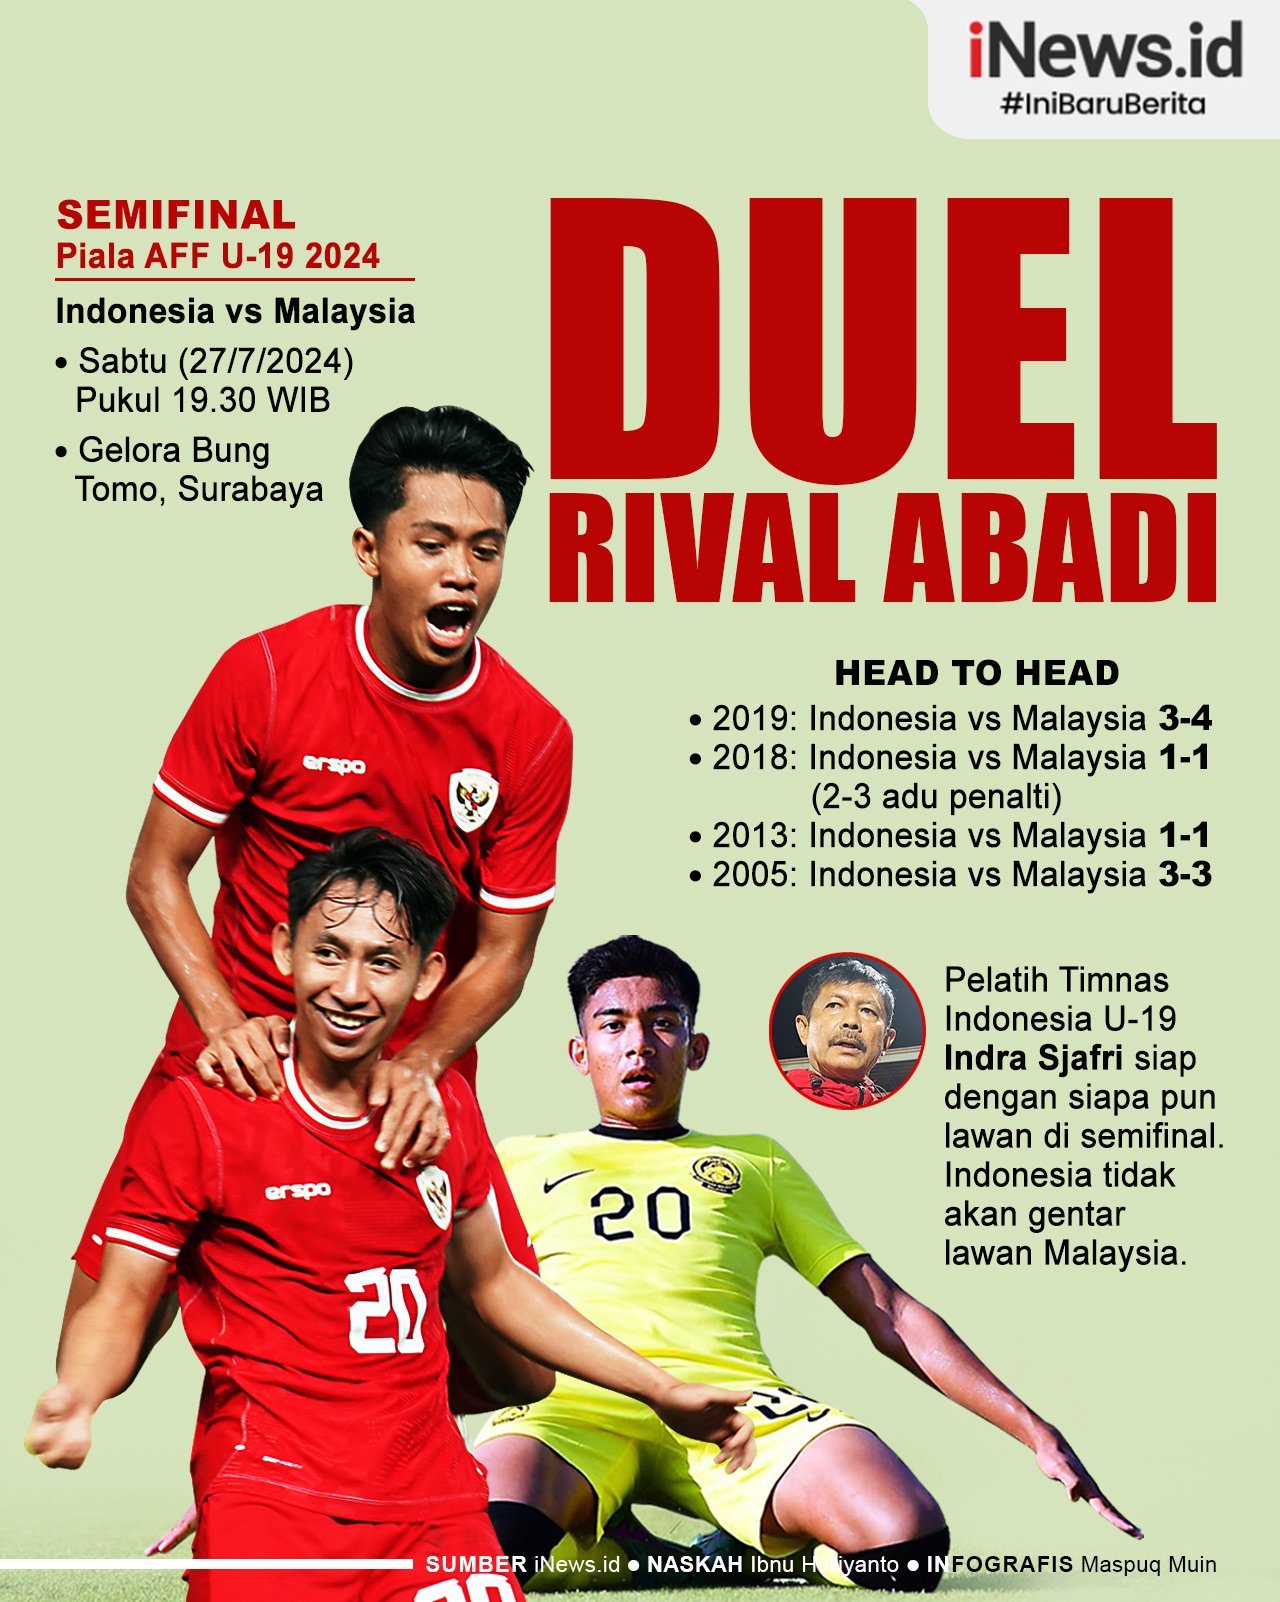 Infografis Indonesia Vs Malaysia di Semifinal Piala AFF U-19 2024: Duel Rival Abadi!